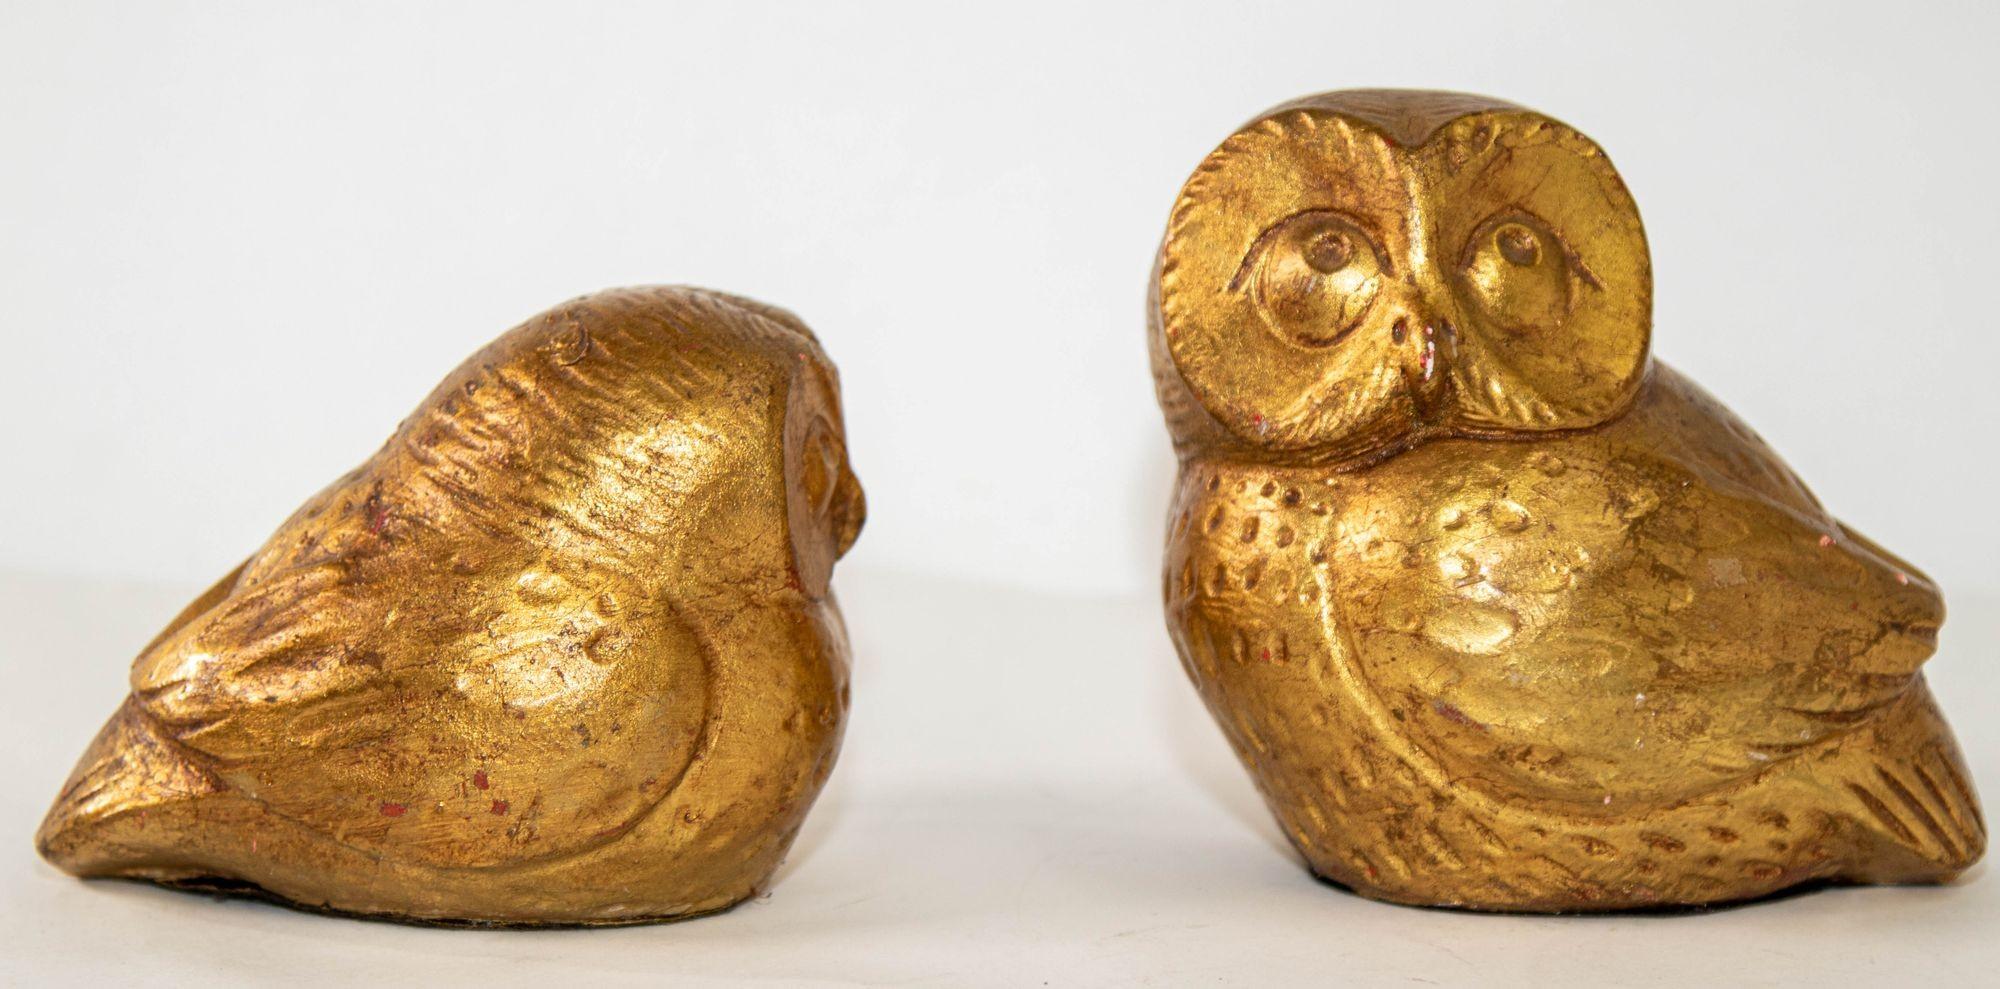 20th Century Vintage Gilded Owl Decor Sculptures in 24k Gold Leaf Mid-Century Modern, 1960s